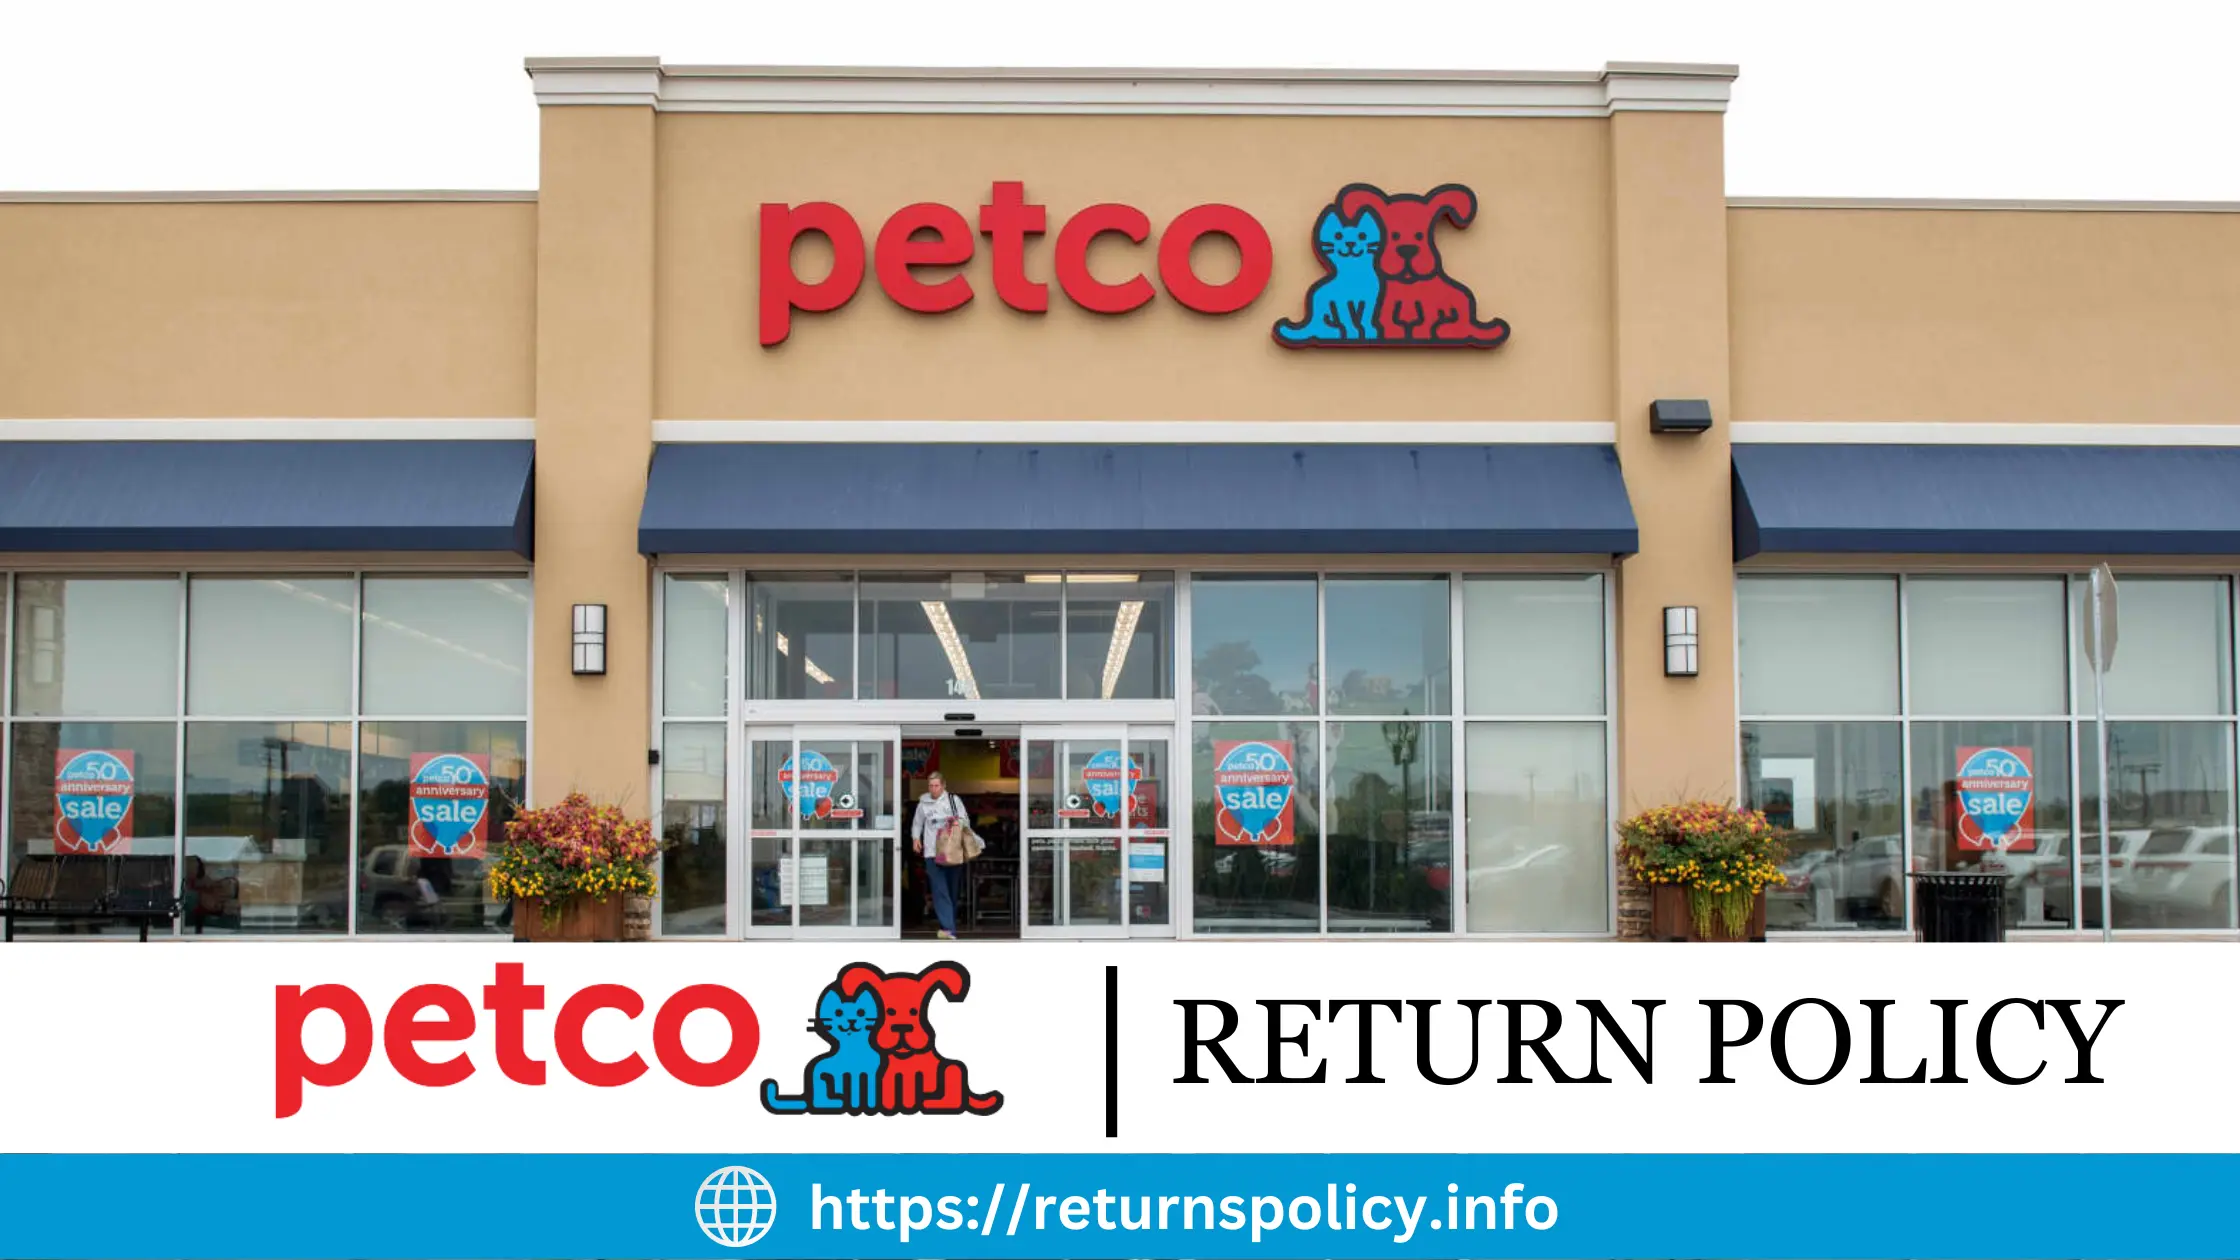 Petco Return Policy